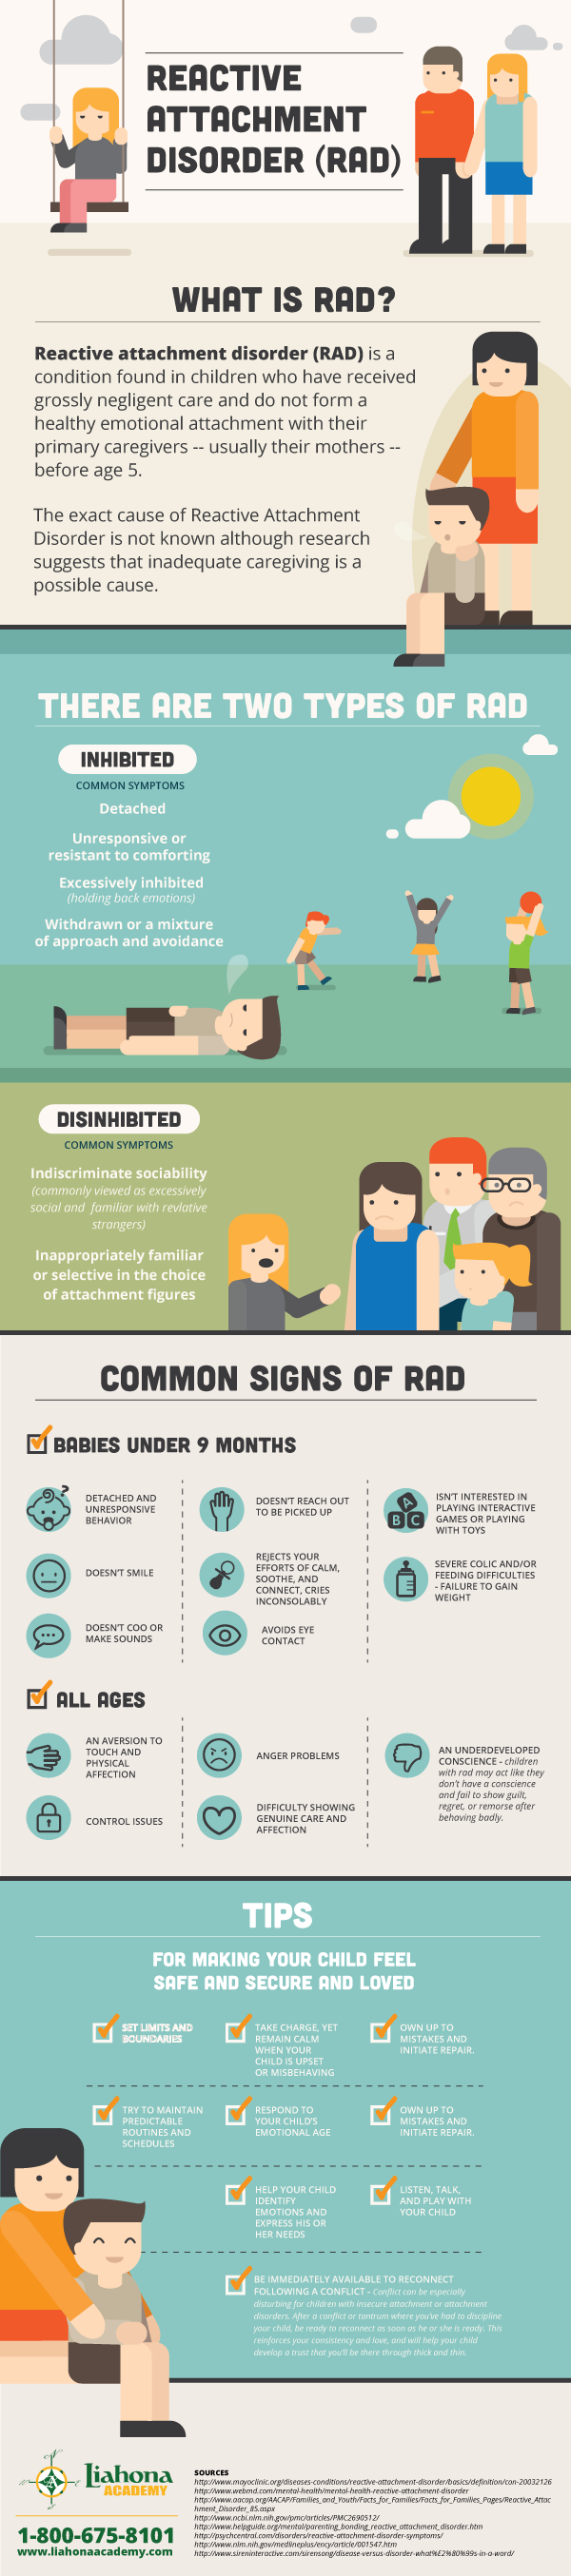 inhibited rad disorder symptoms